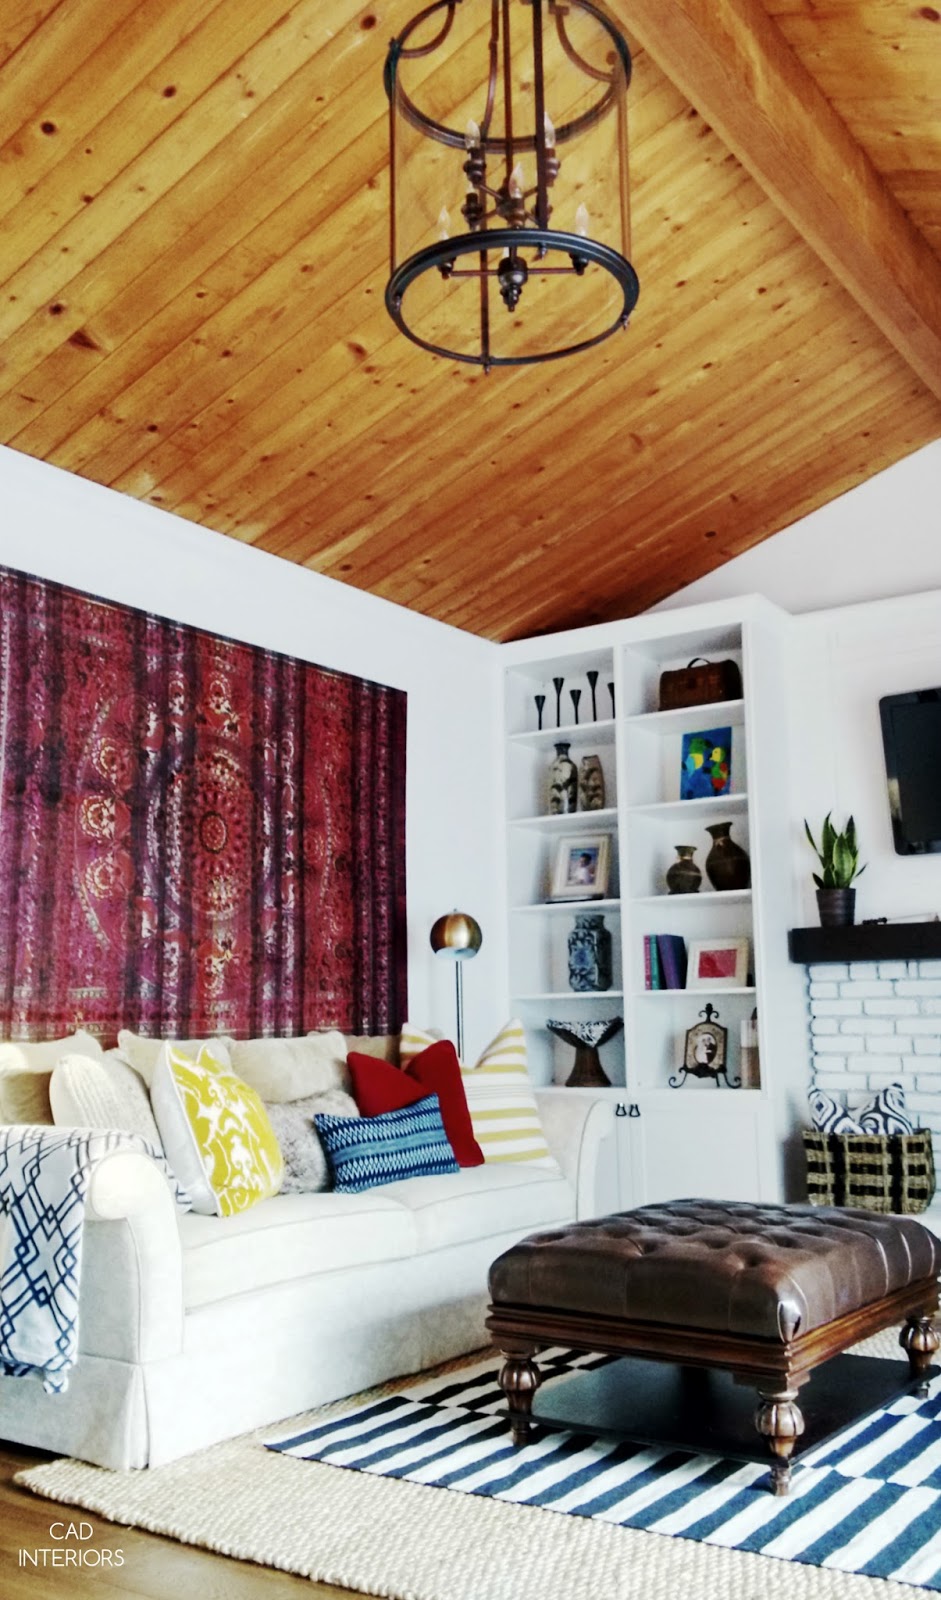 CAD INTERIORS family room renovation makeover reveal interior design decorating bohemian boho transitional modern